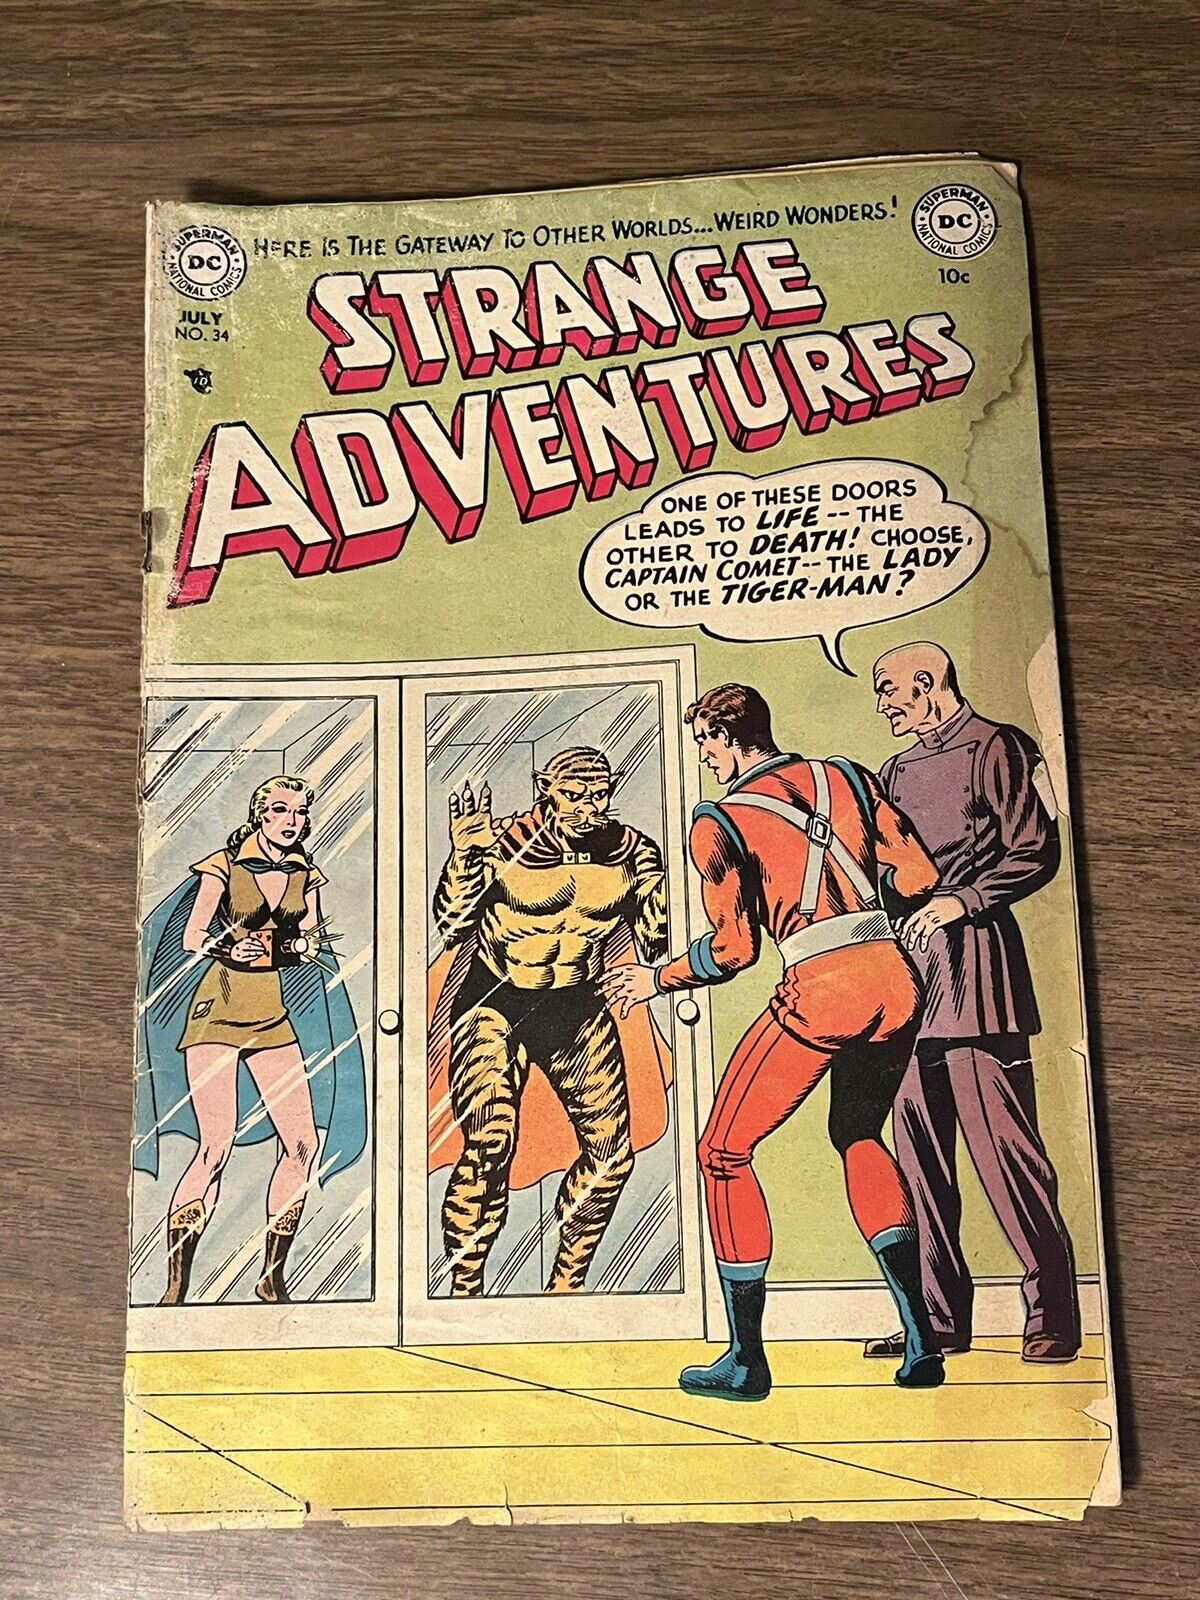 July 1953 Strange Adventures Comic Book. No. 34, Captain Comet